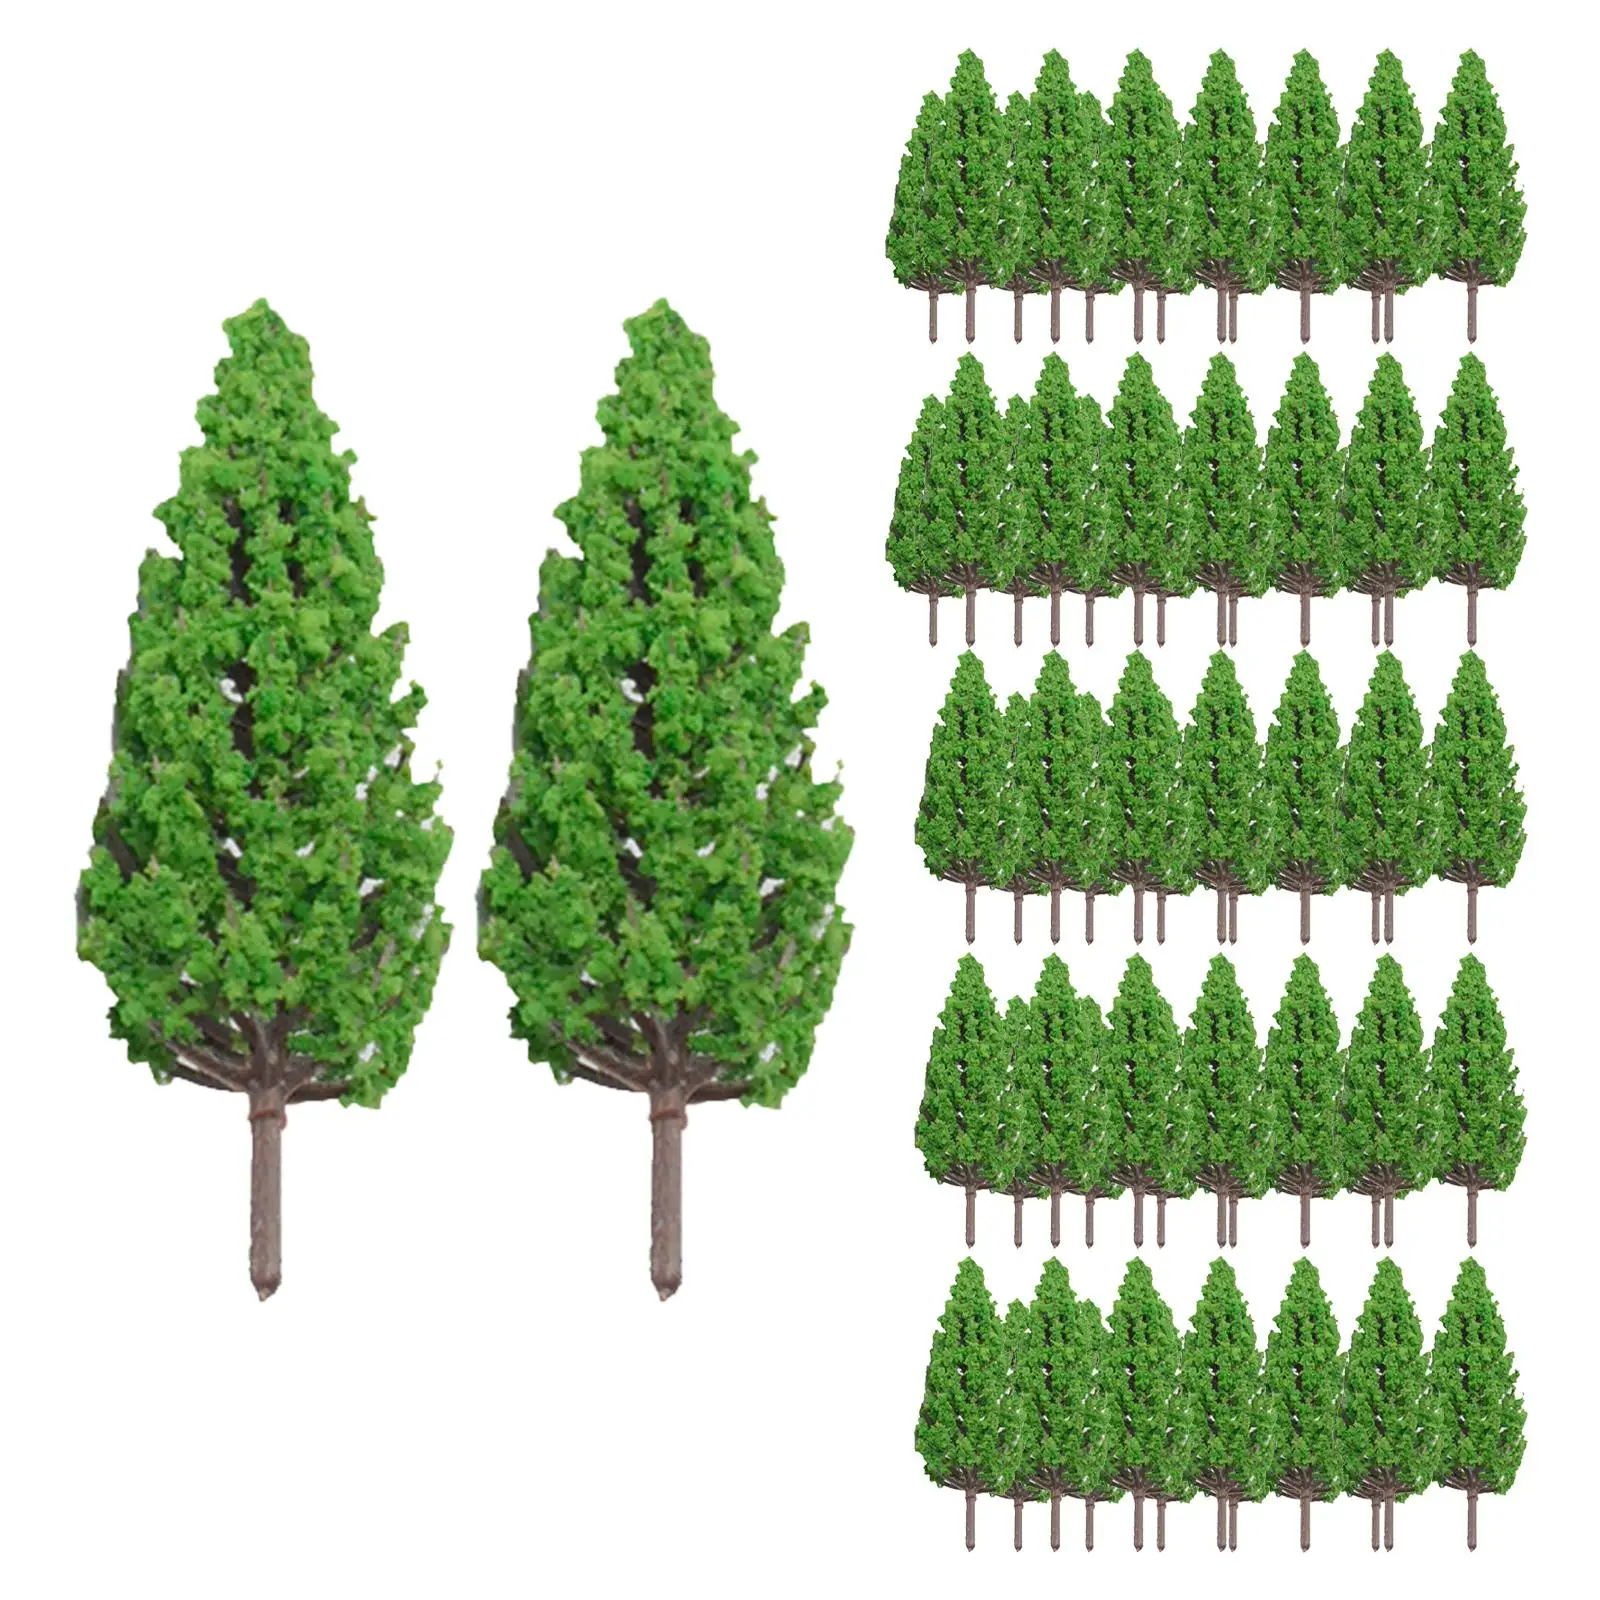 70 Pieces Mini Landscape Tree Model Trees for DIY Crafts Miniature Scenery